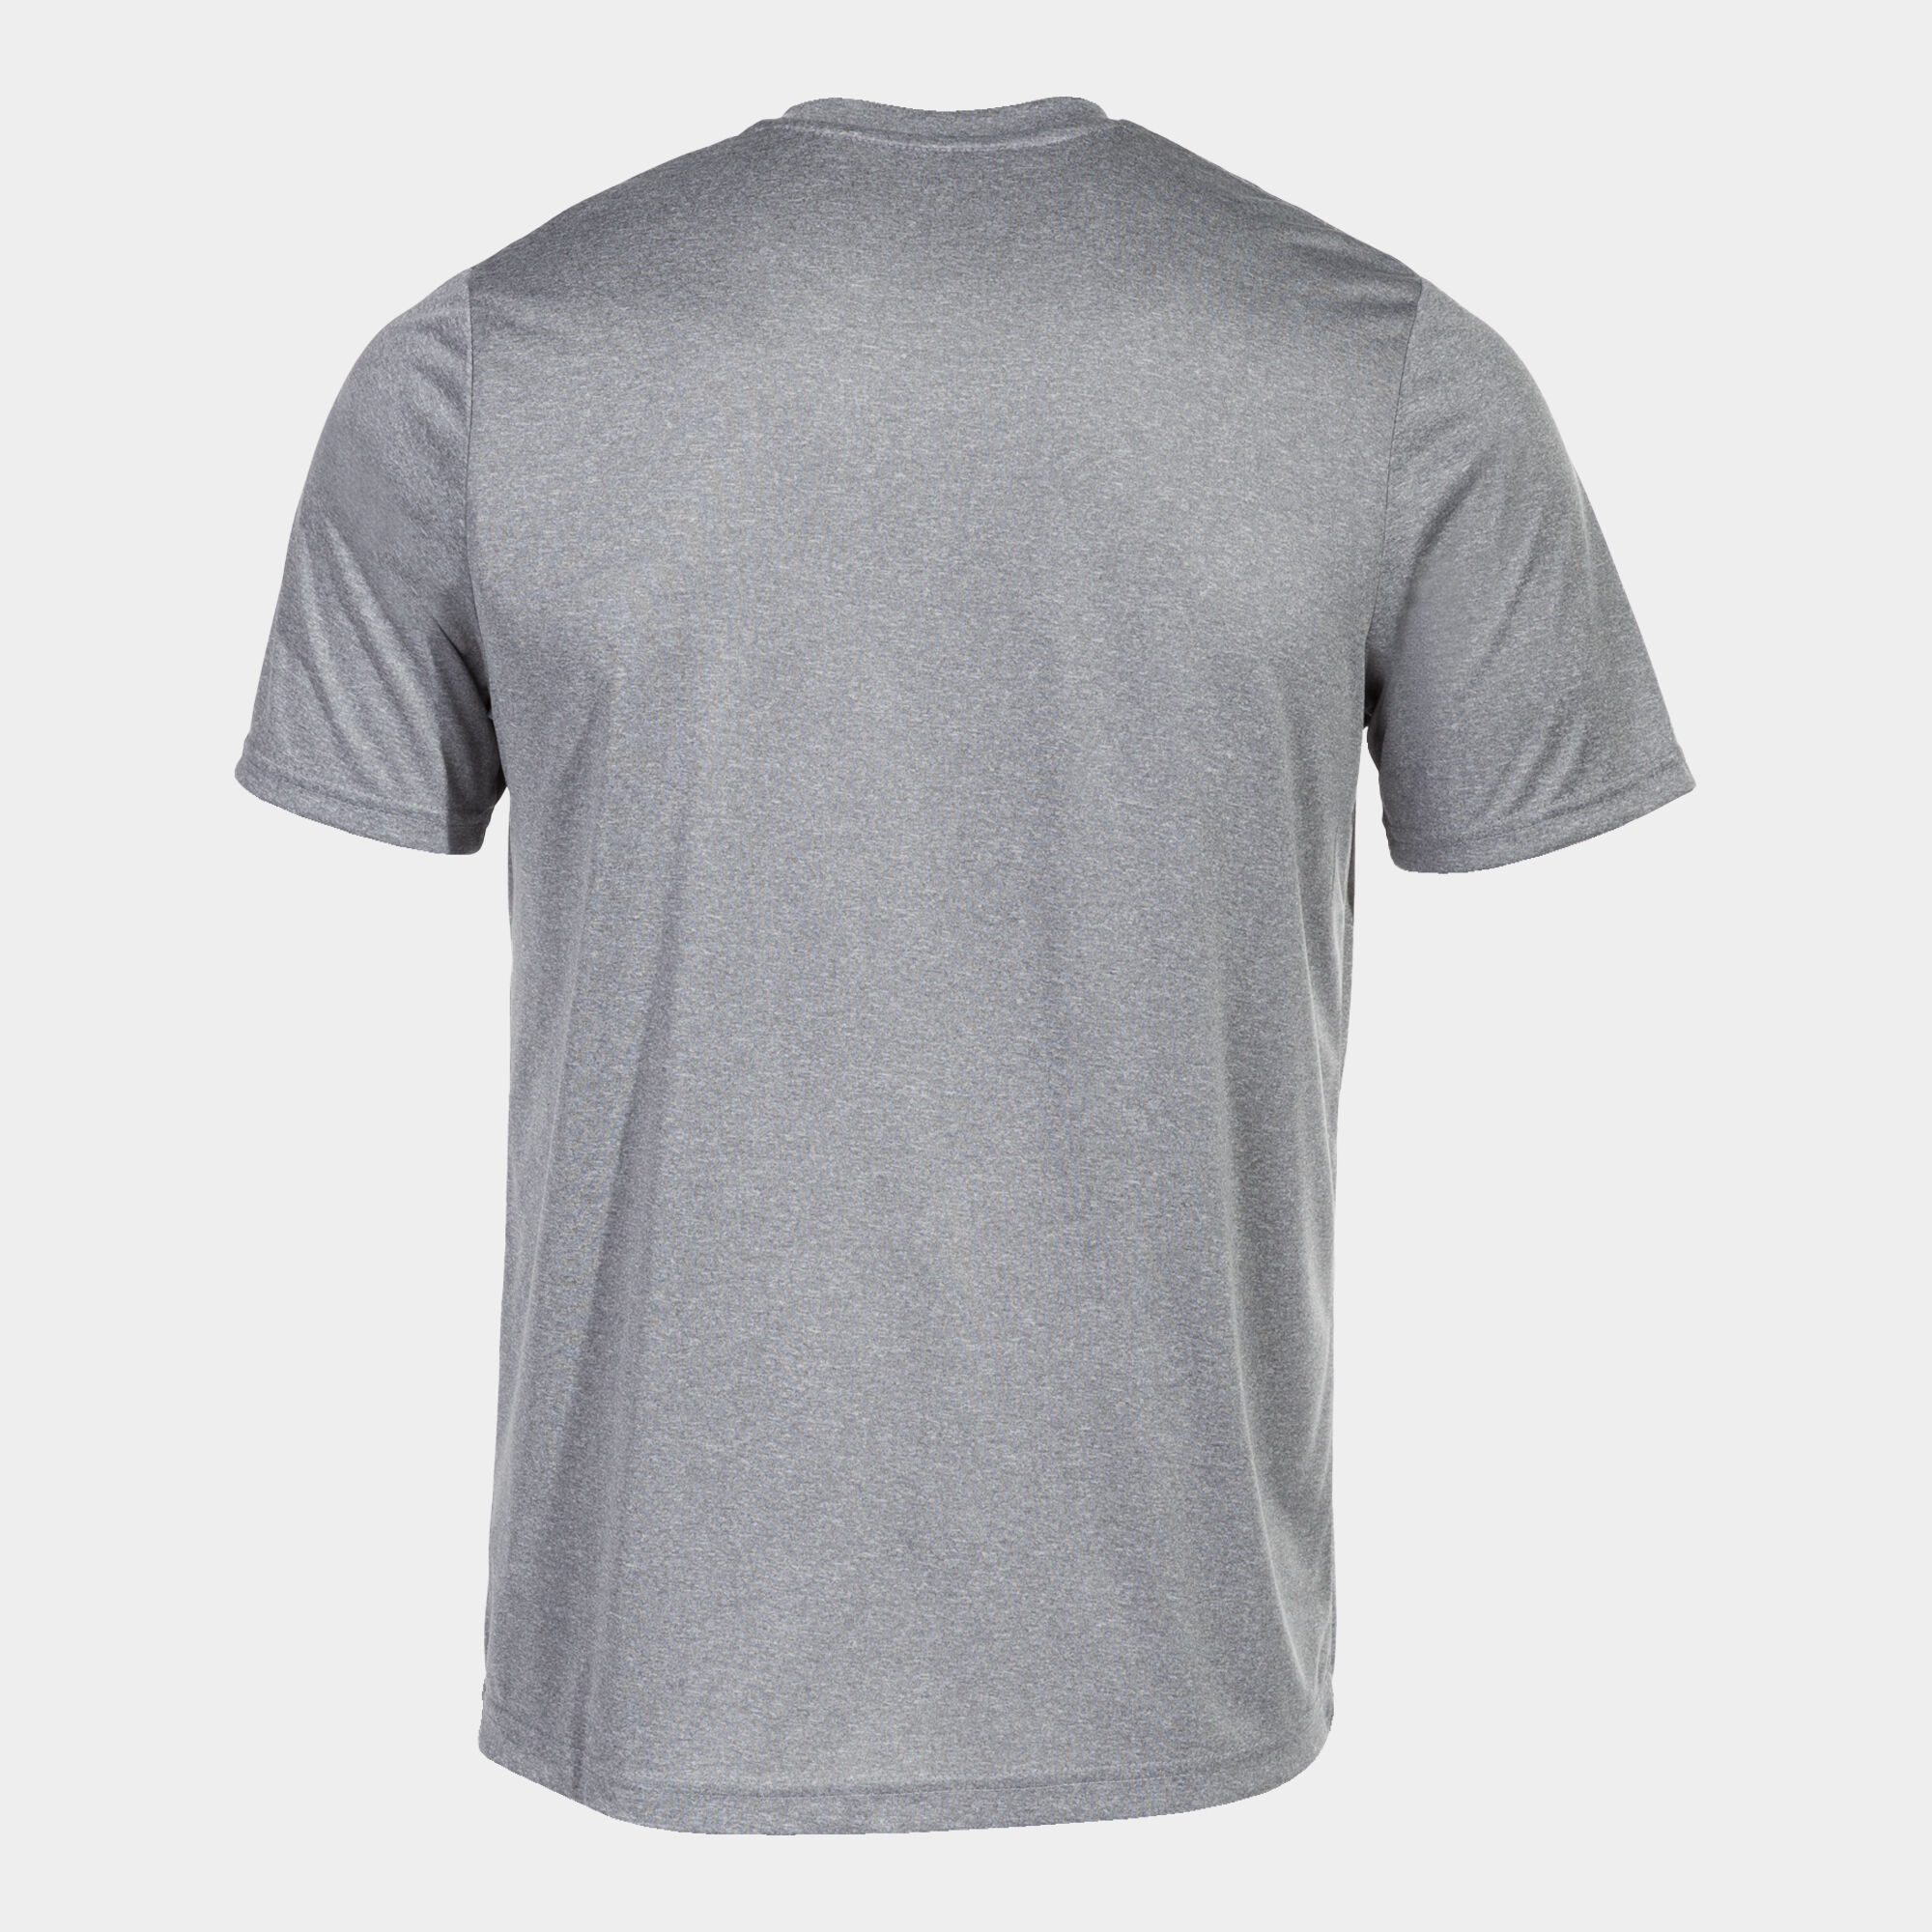 Shirt short sleeve man Combi melange gray